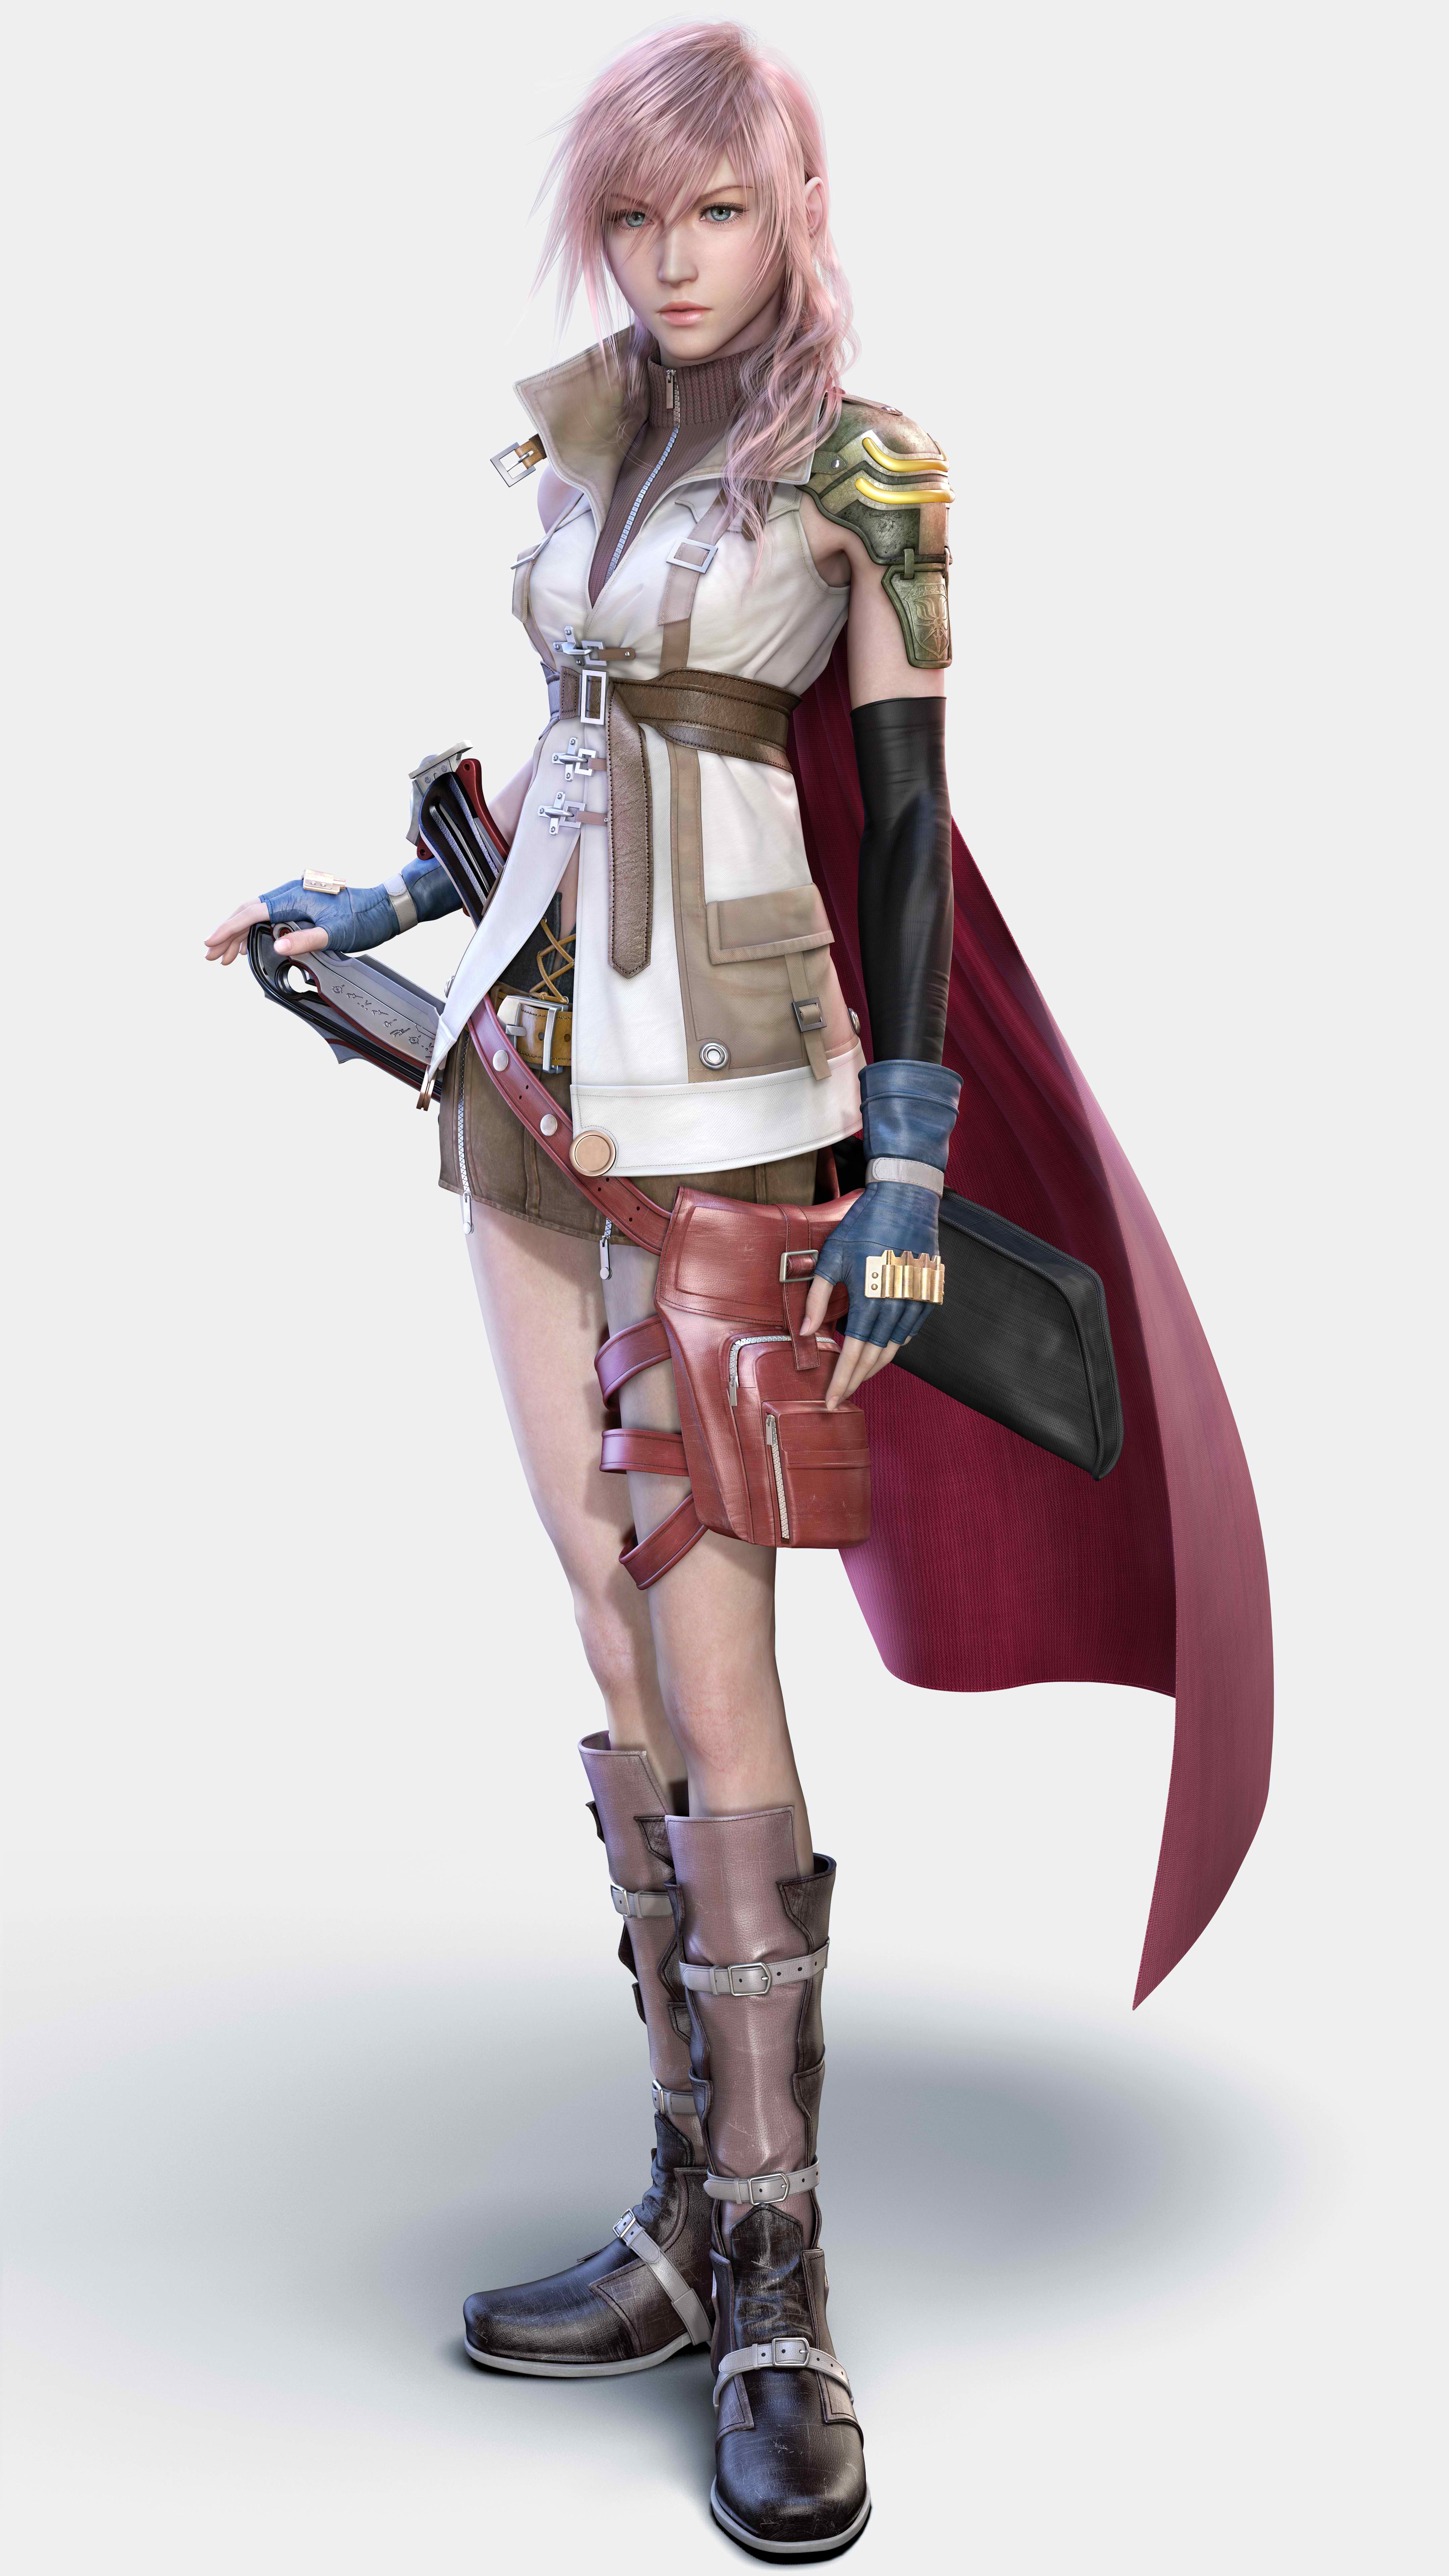 Final Fantasy Xiii Claire Farron 4320x7680